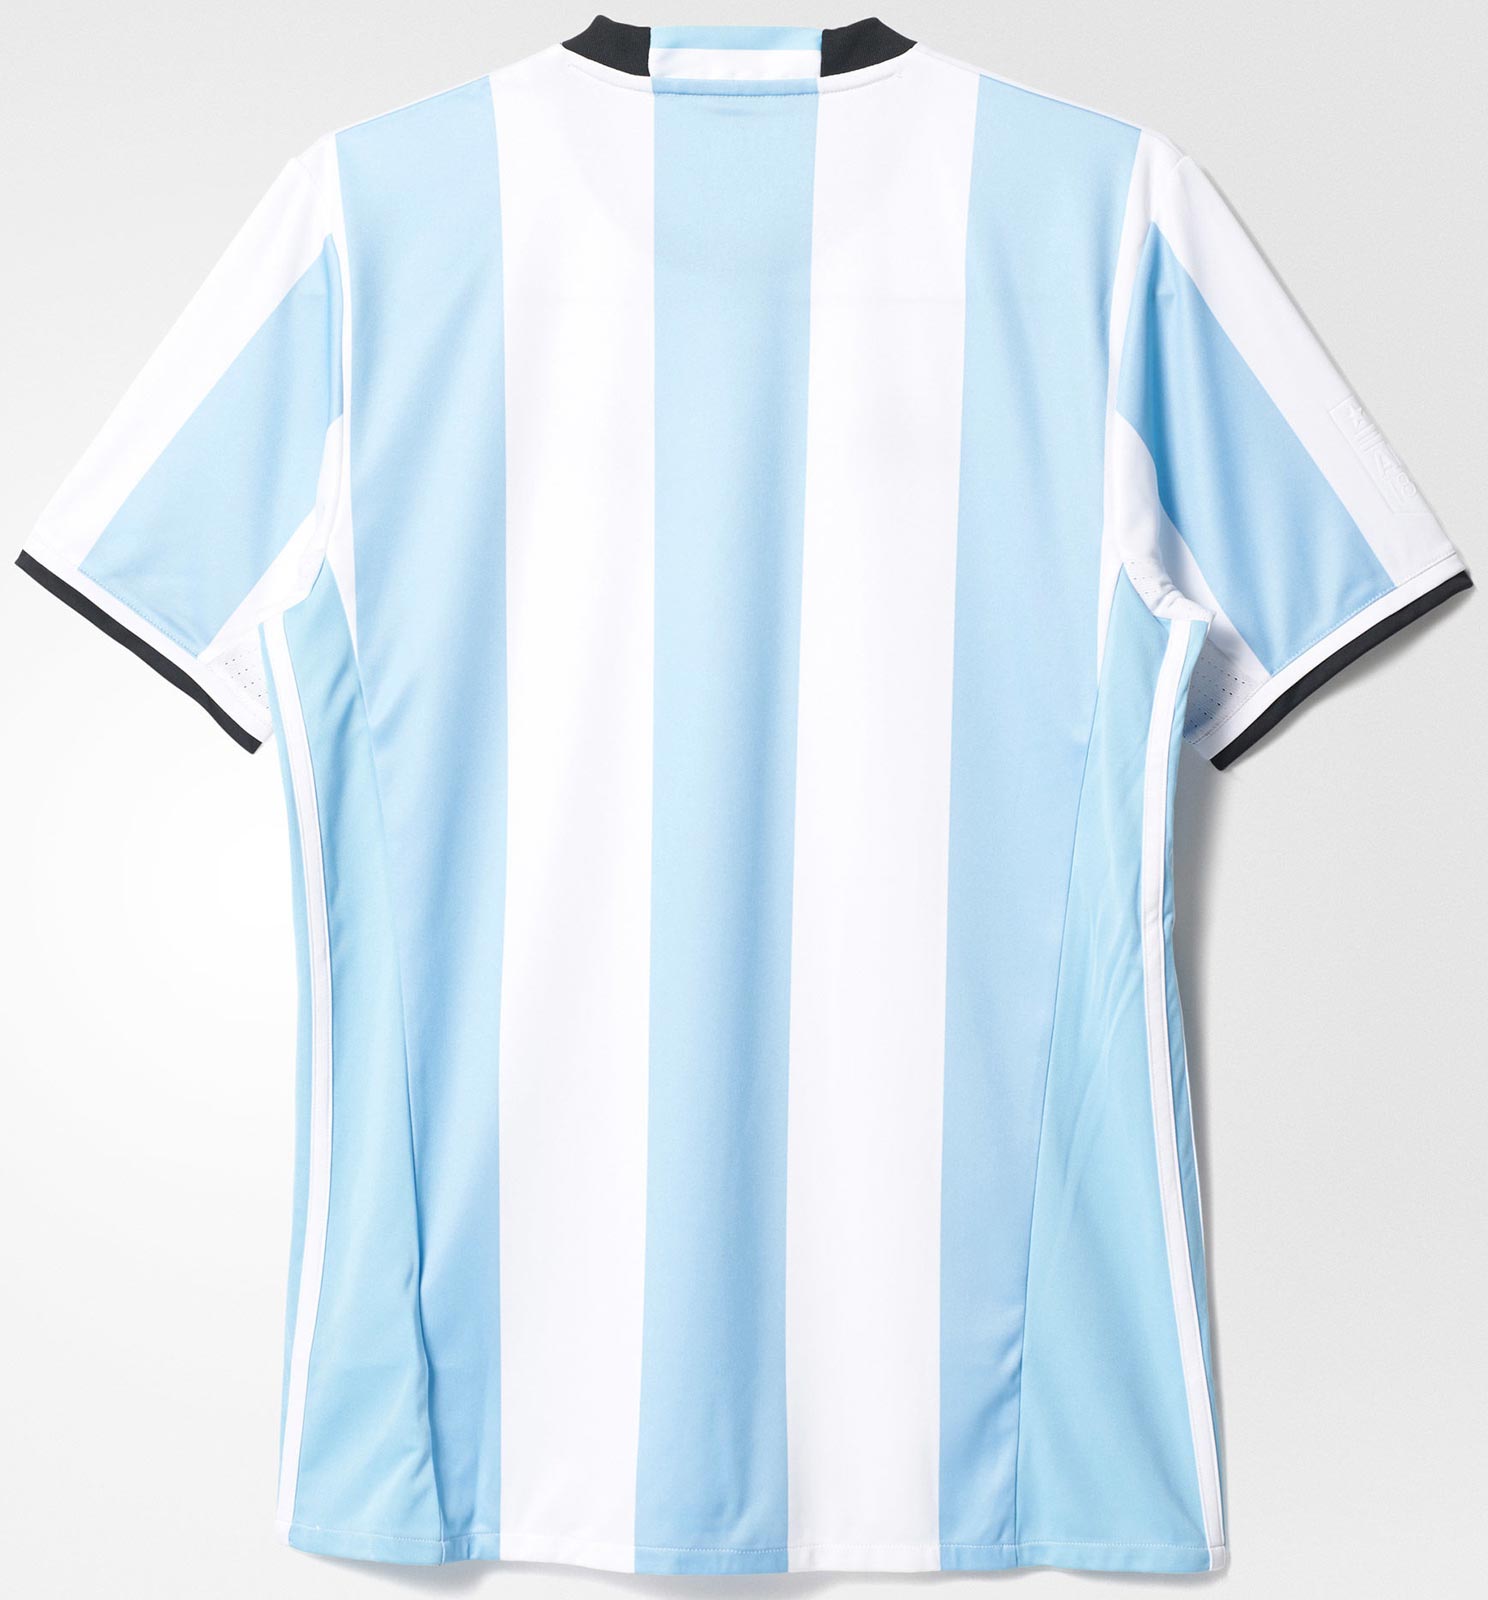 argentina-2016-copa-america-kit-4.jpg